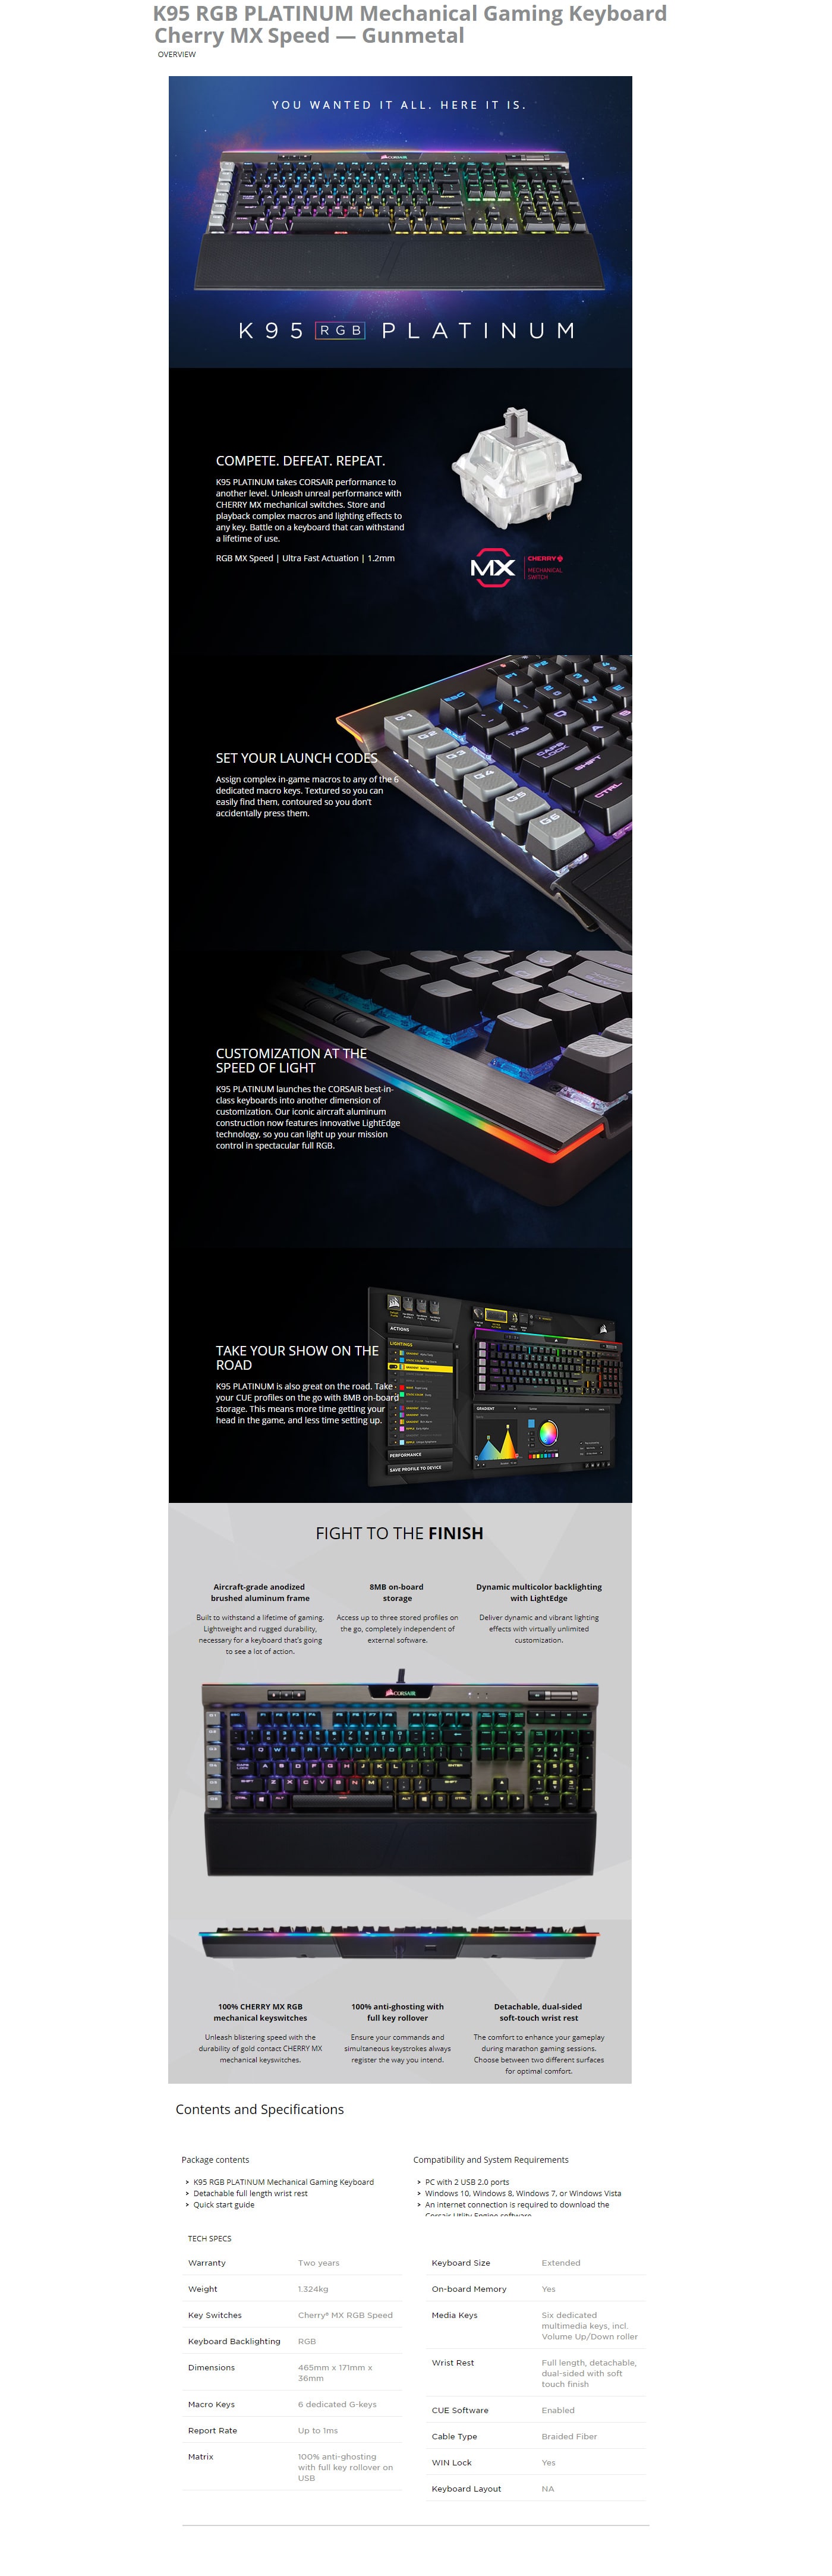 Corsair K95 RGB PLATINUM Mechanical Gaming Keyboard  features